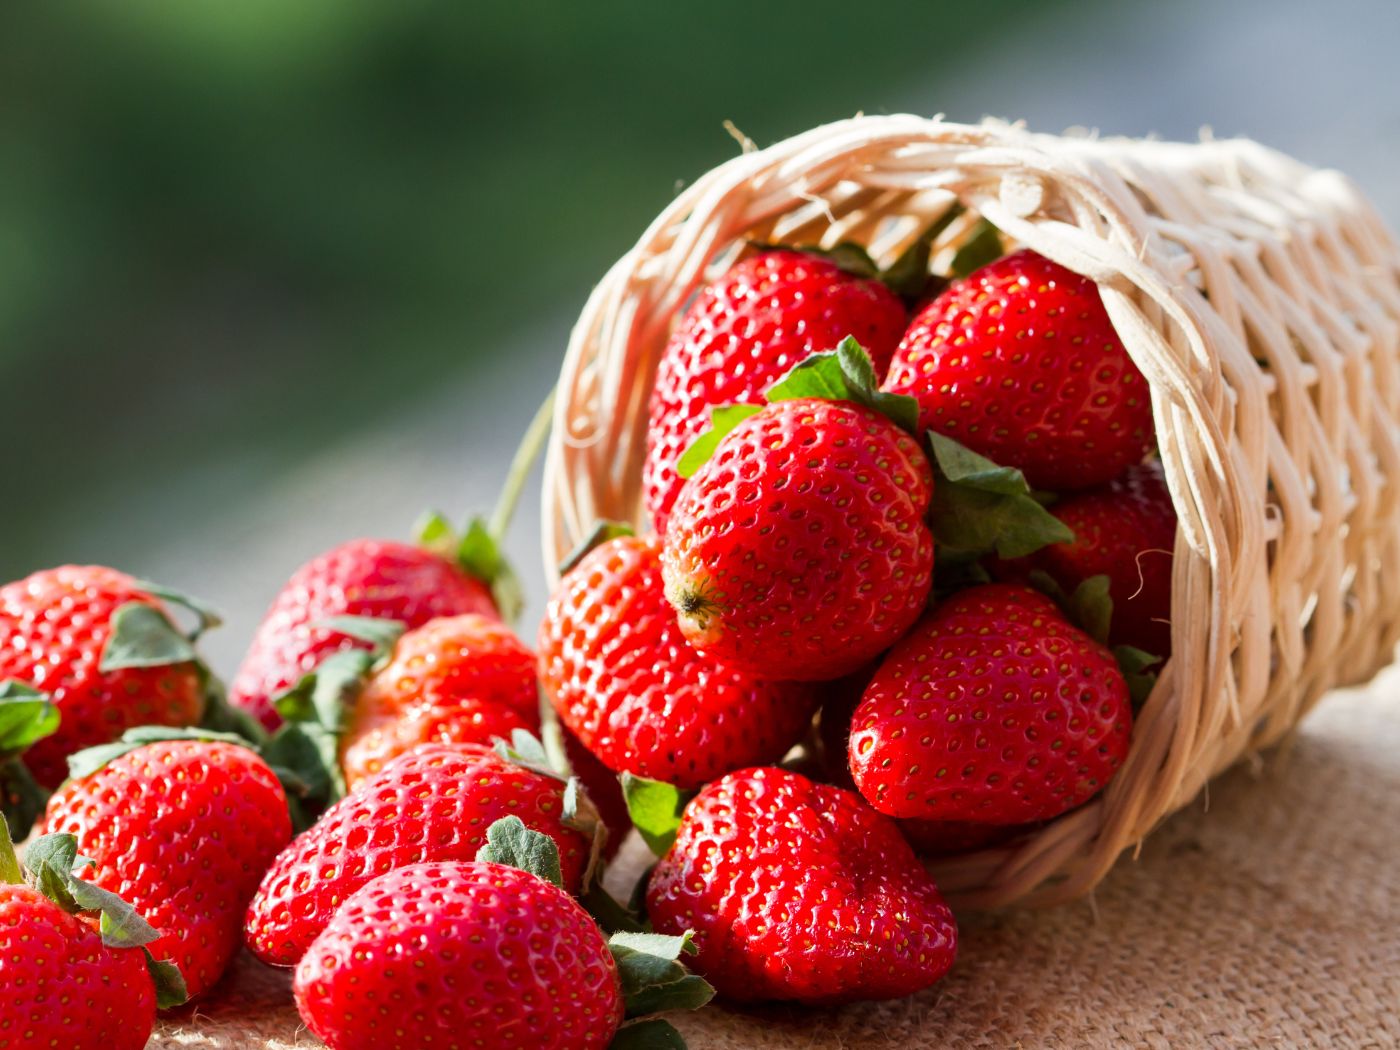 Benefits of Eating Strawberries